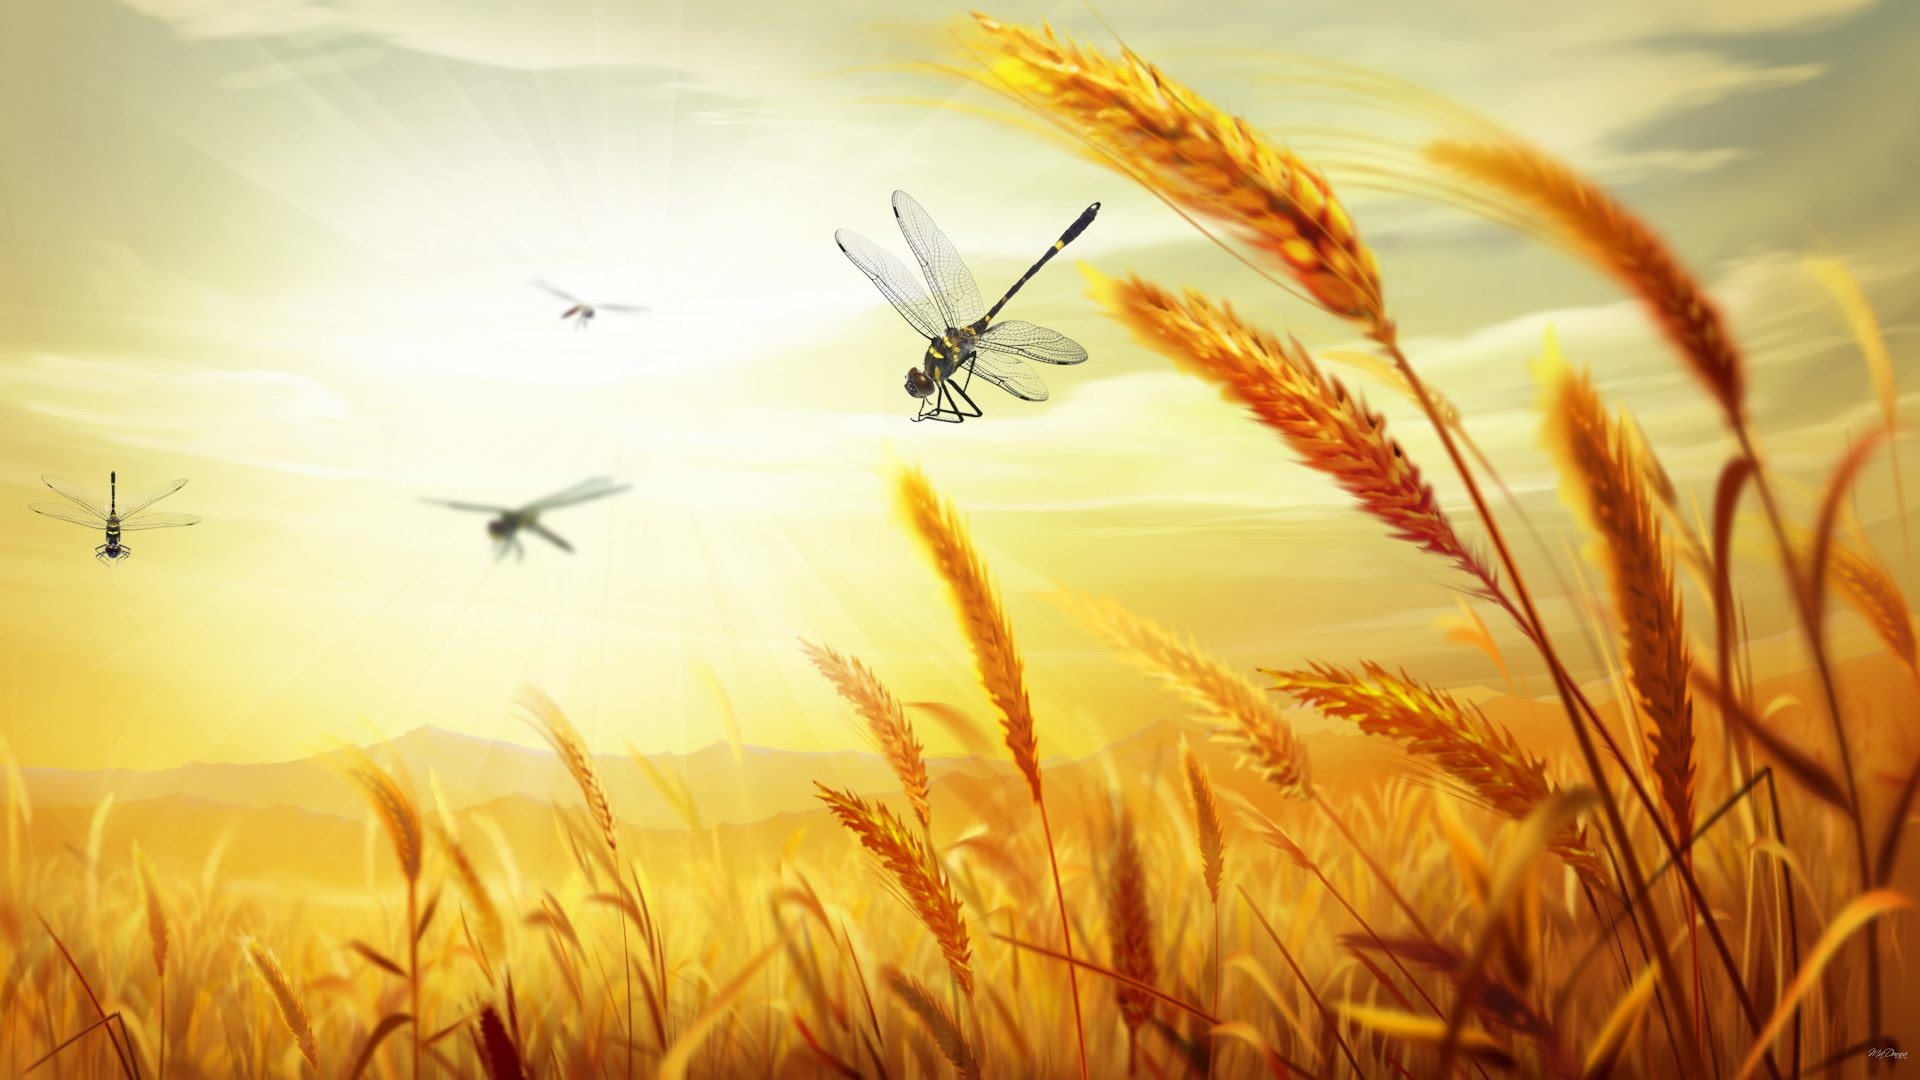 1920x1080 Grain Tag - Country Field Dragonflies Agriculture Wheat Gold Farm Sky Grass  Bread Grain Harvest Oats